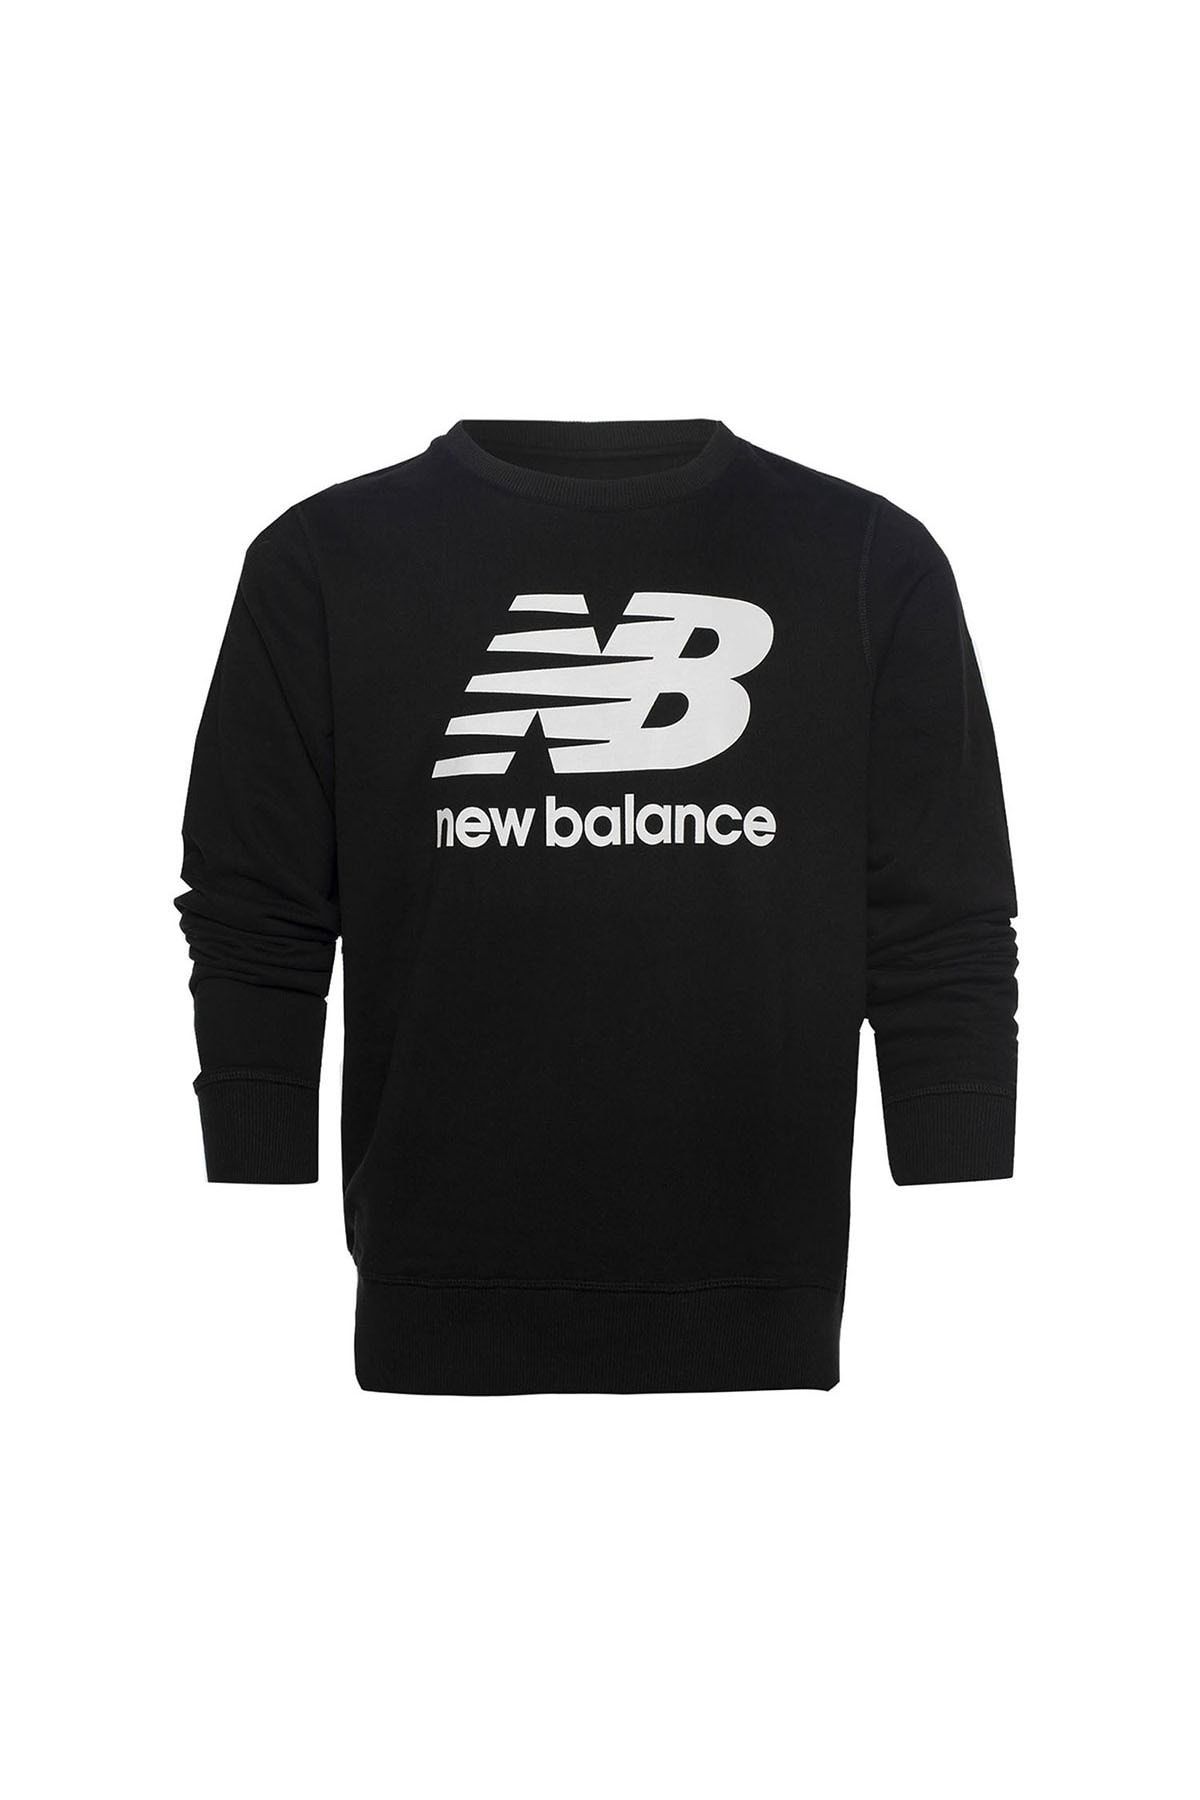 New Balance Erkek Günlük Sweatshirt Mtc1105-bk